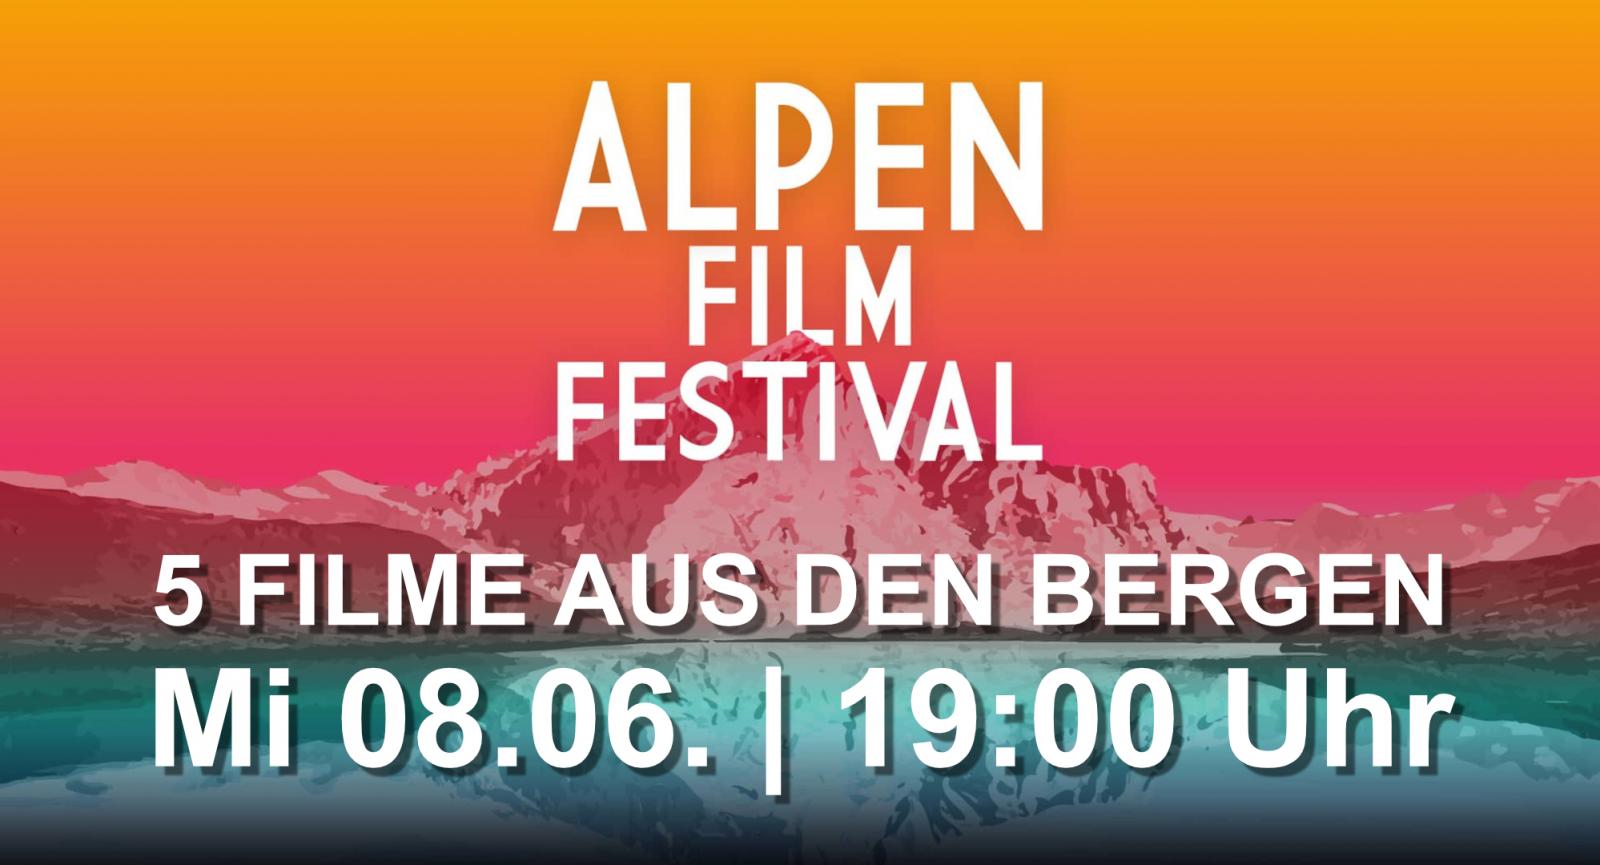 ALPEN FILM FESTIVAL goes Westerwald